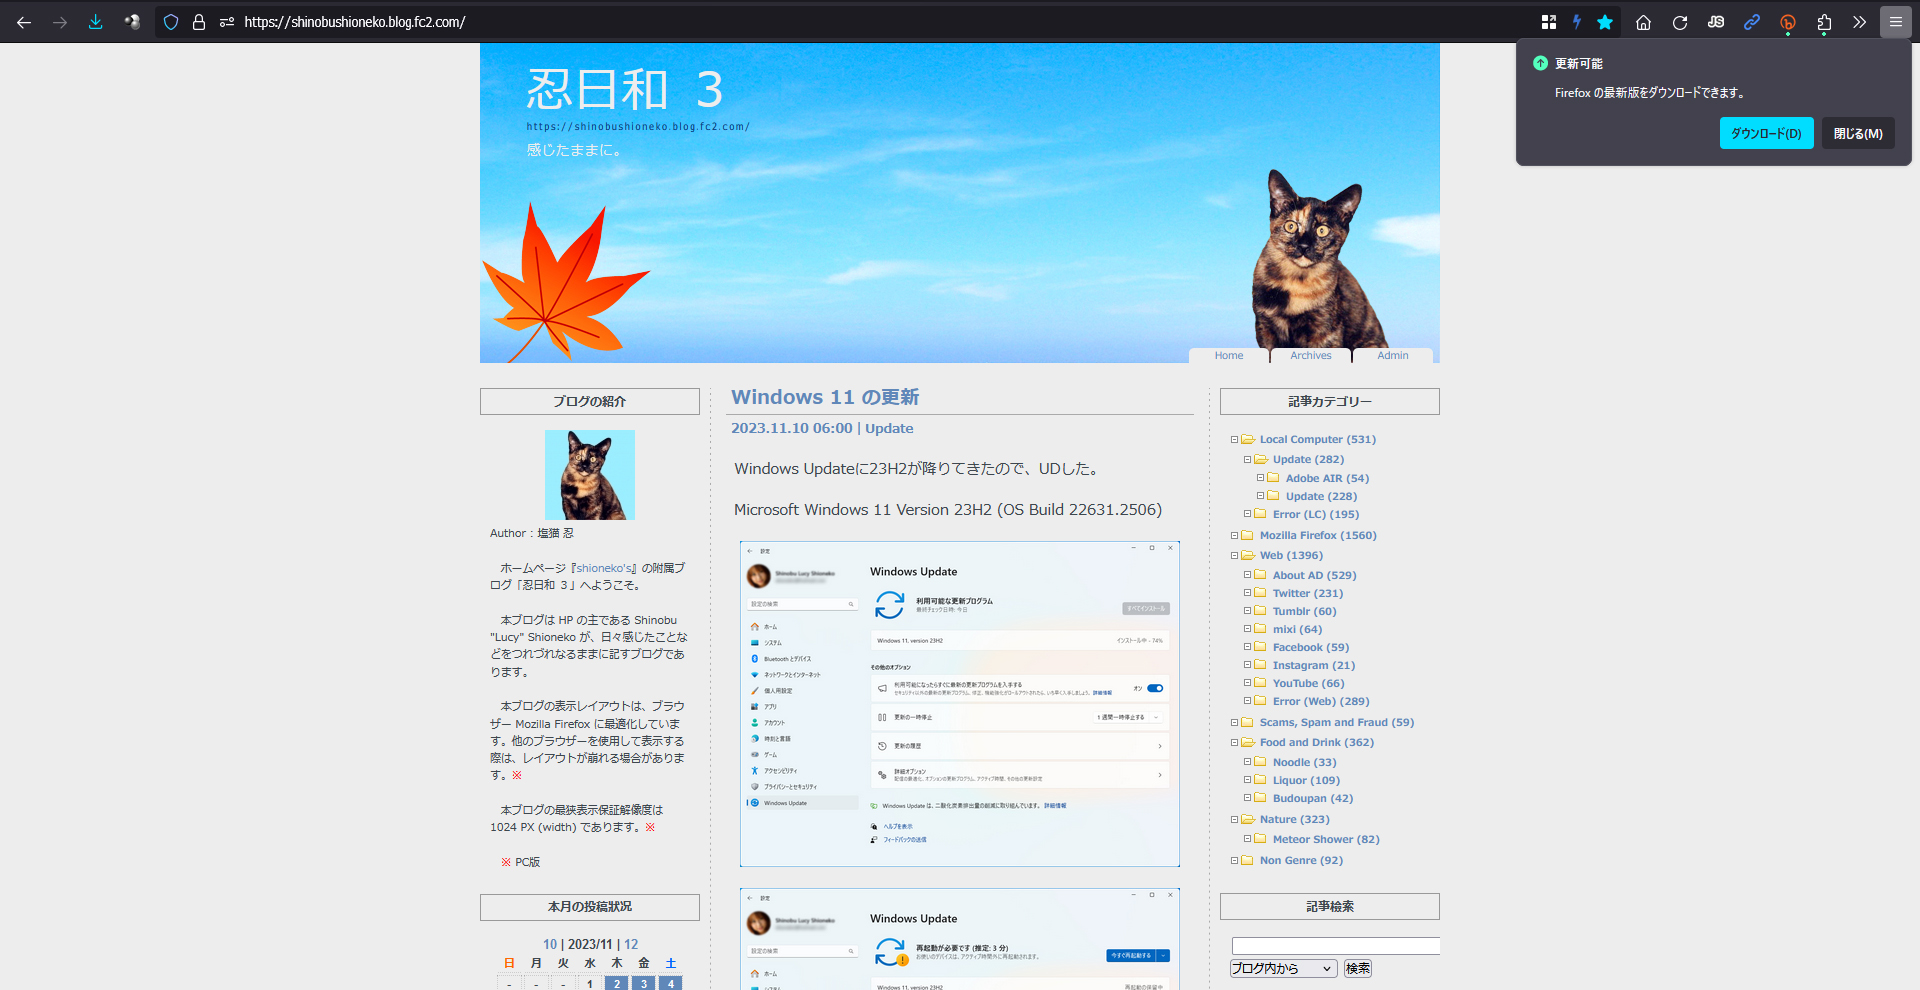 Mozilla Firefox 120.0 Beta 9